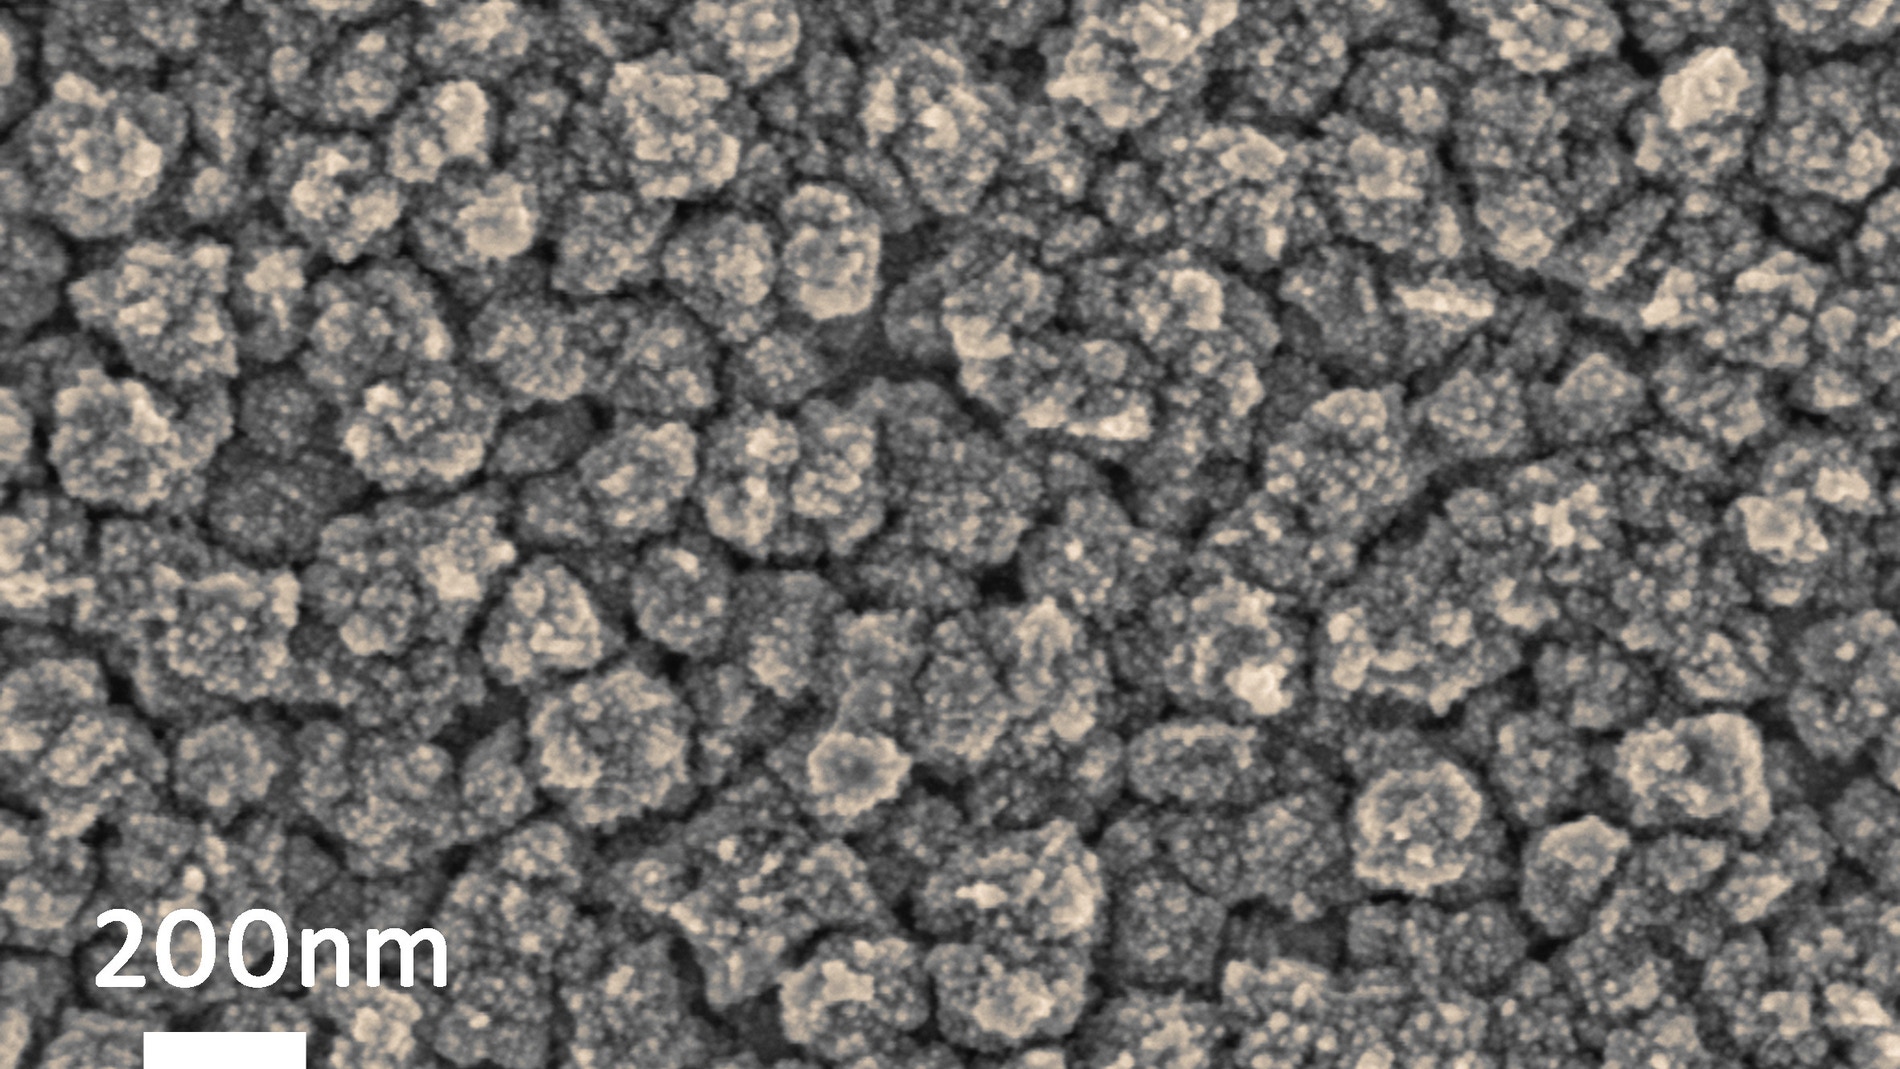 Nanoesponja metálica vista al microscopio